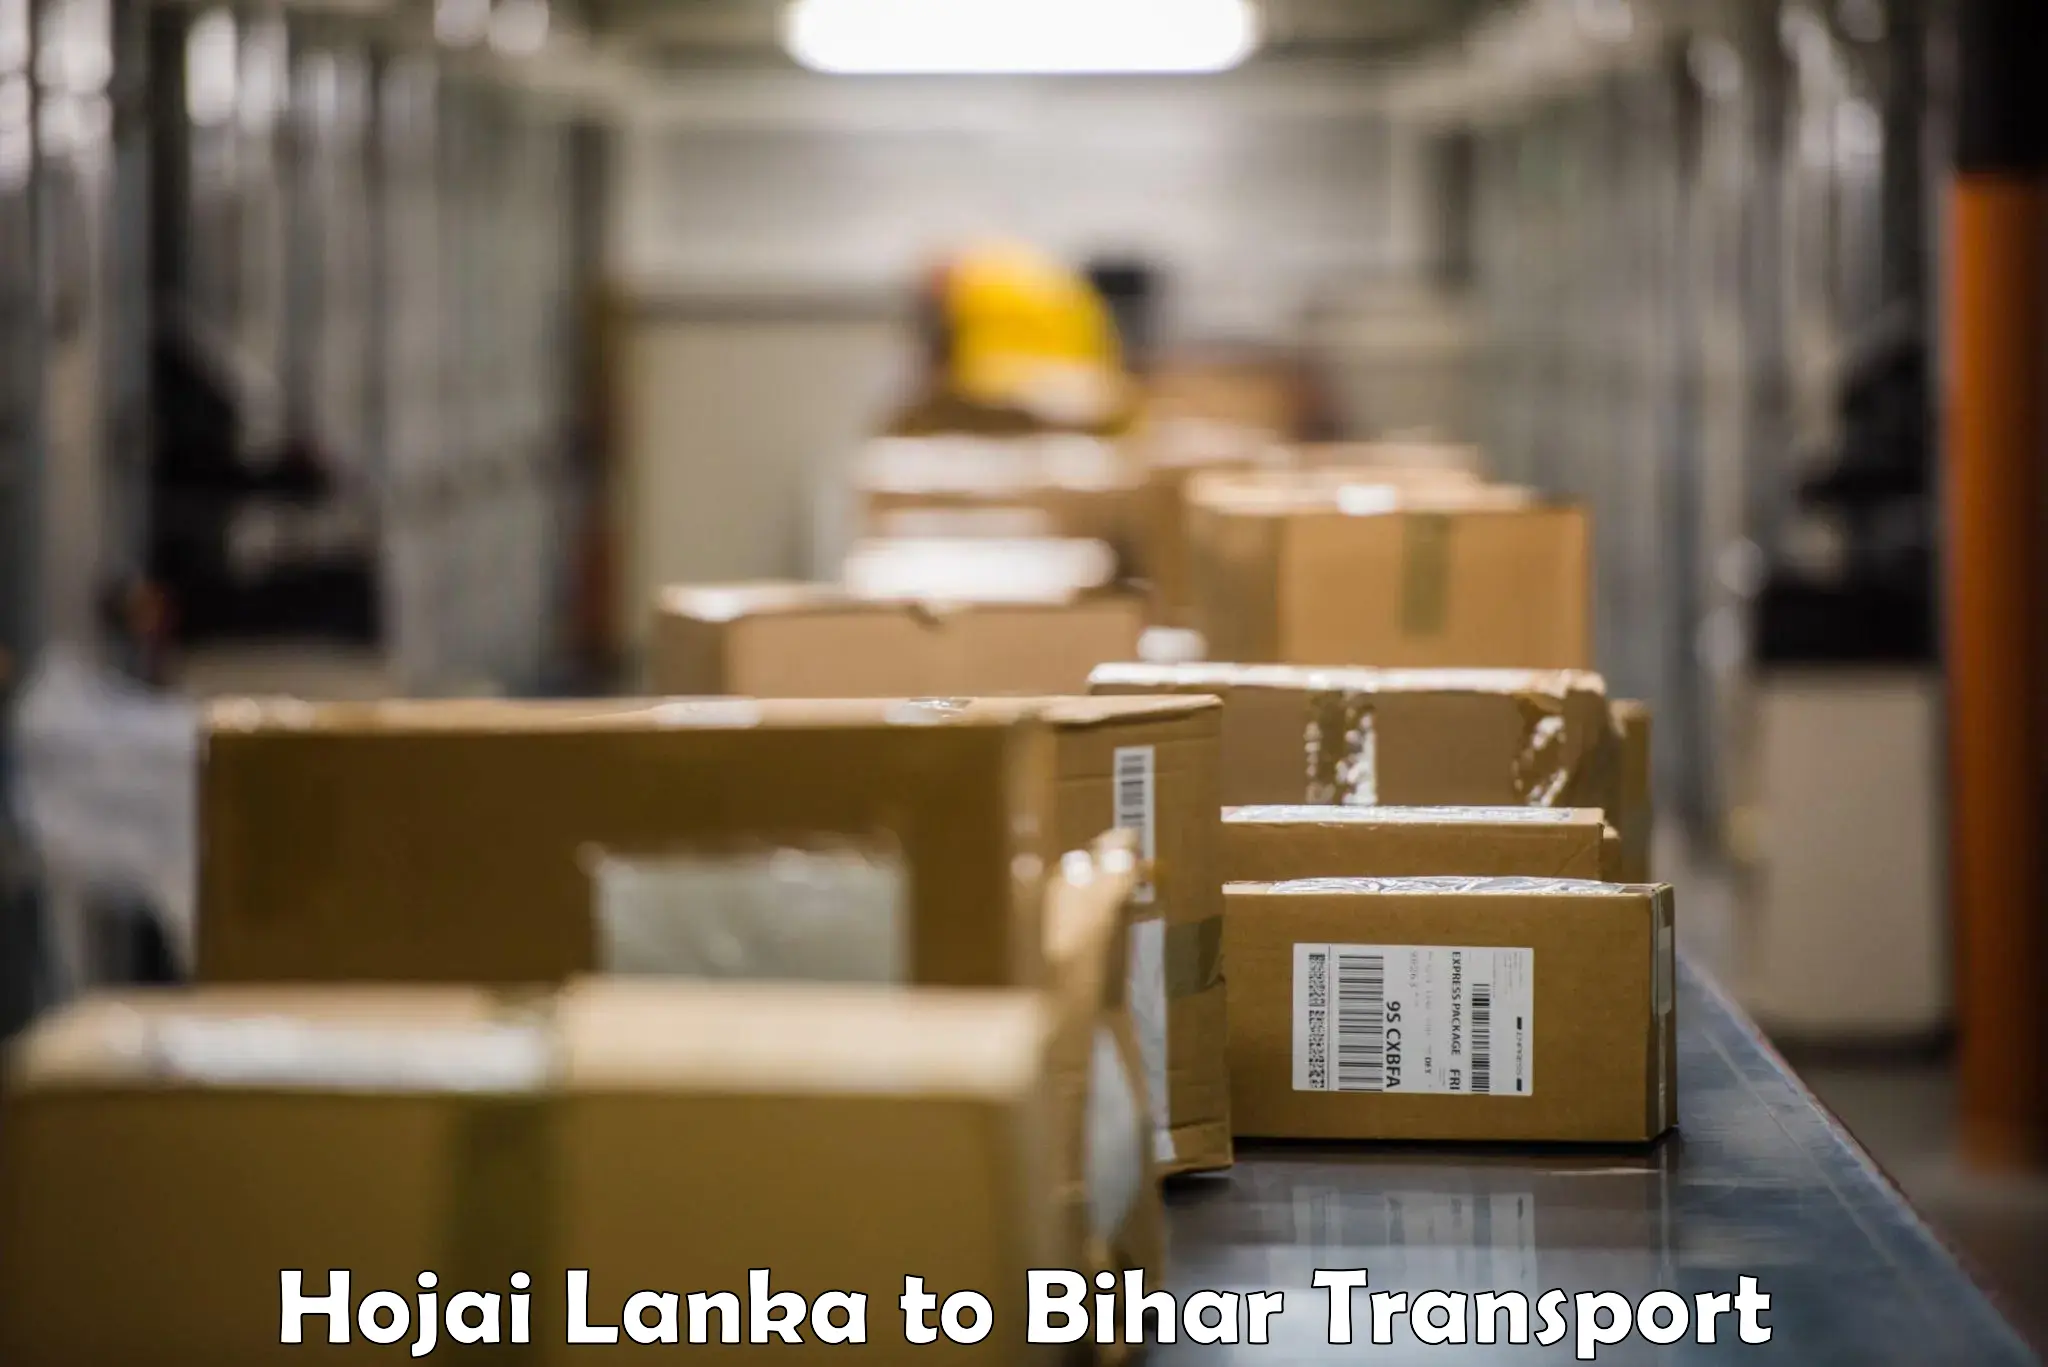 India truck logistics services Hojai Lanka to Chainpur